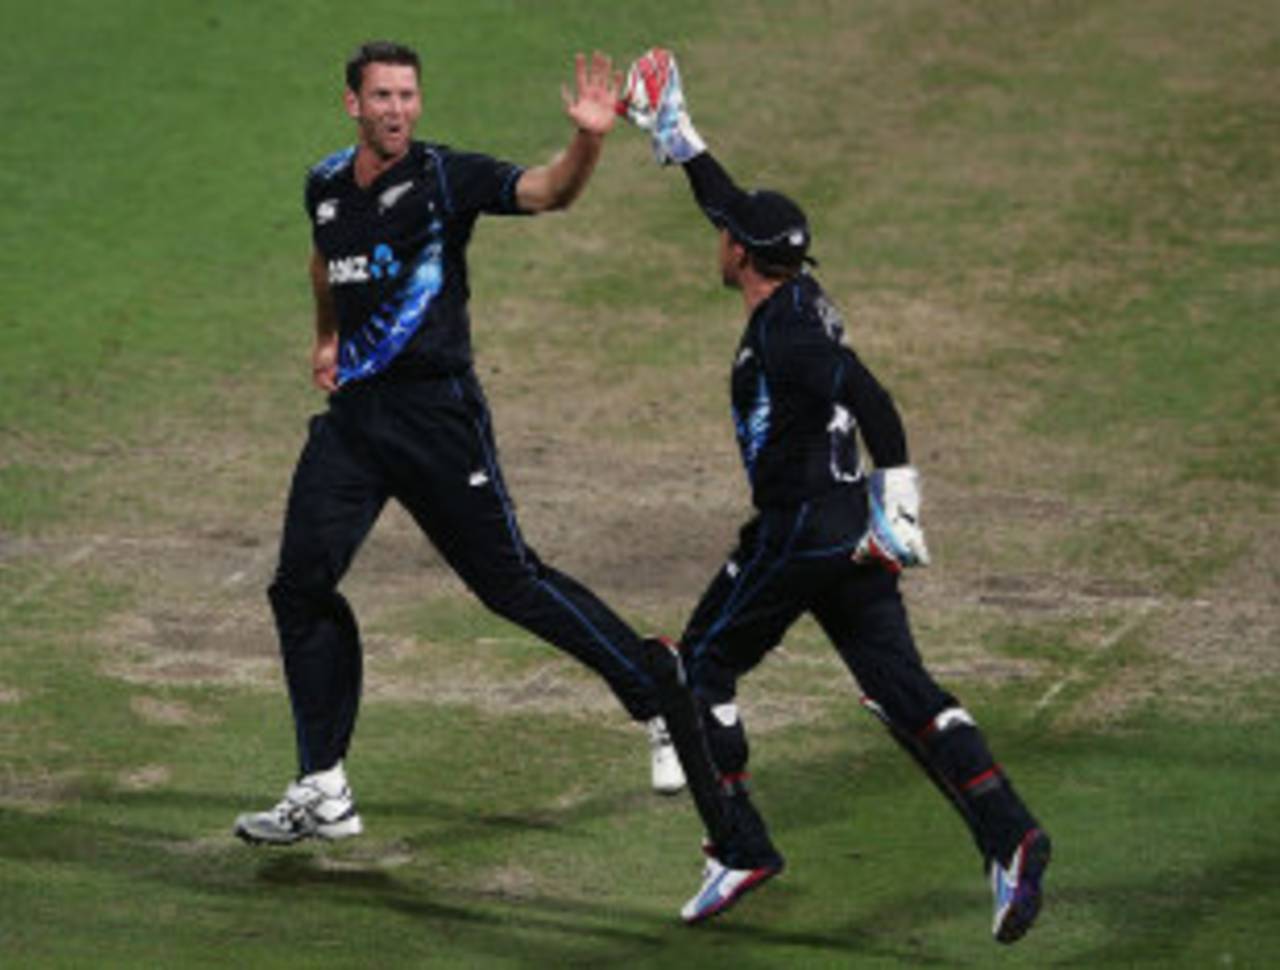 Ian Butler claimed two key wickets on his international return&nbsp;&nbsp;&bull;&nbsp;&nbsp;Getty Images